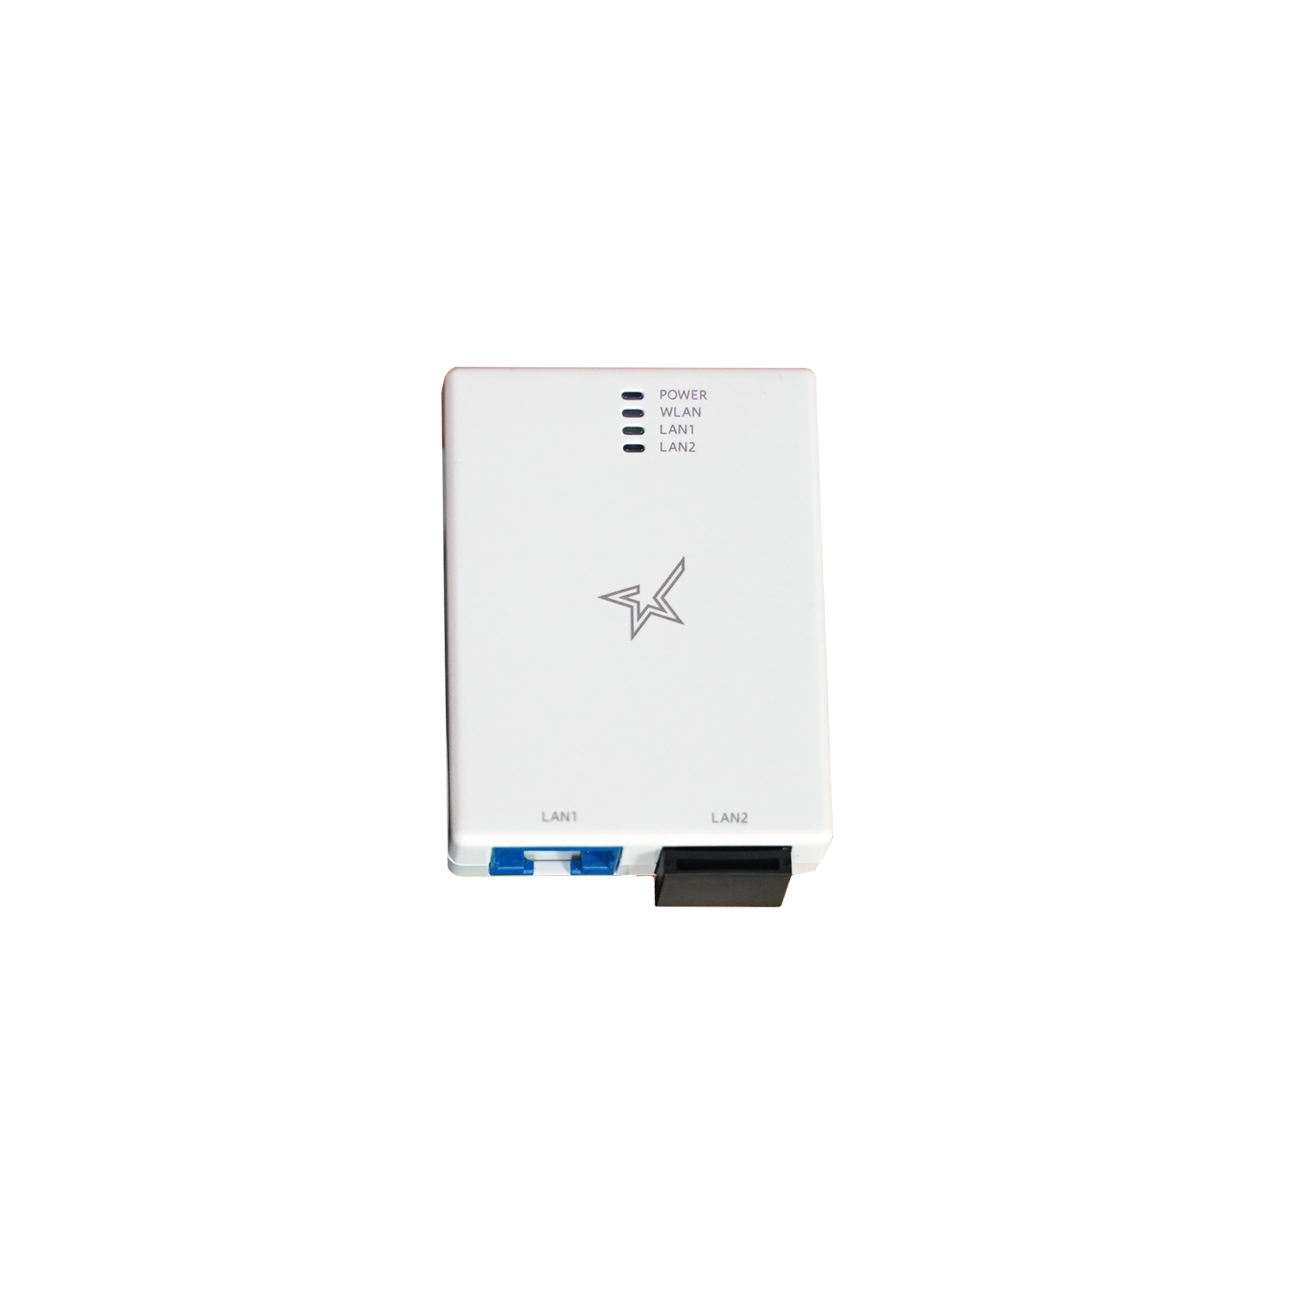 Star Micronics Wireless LAN Adapter (MCW10)